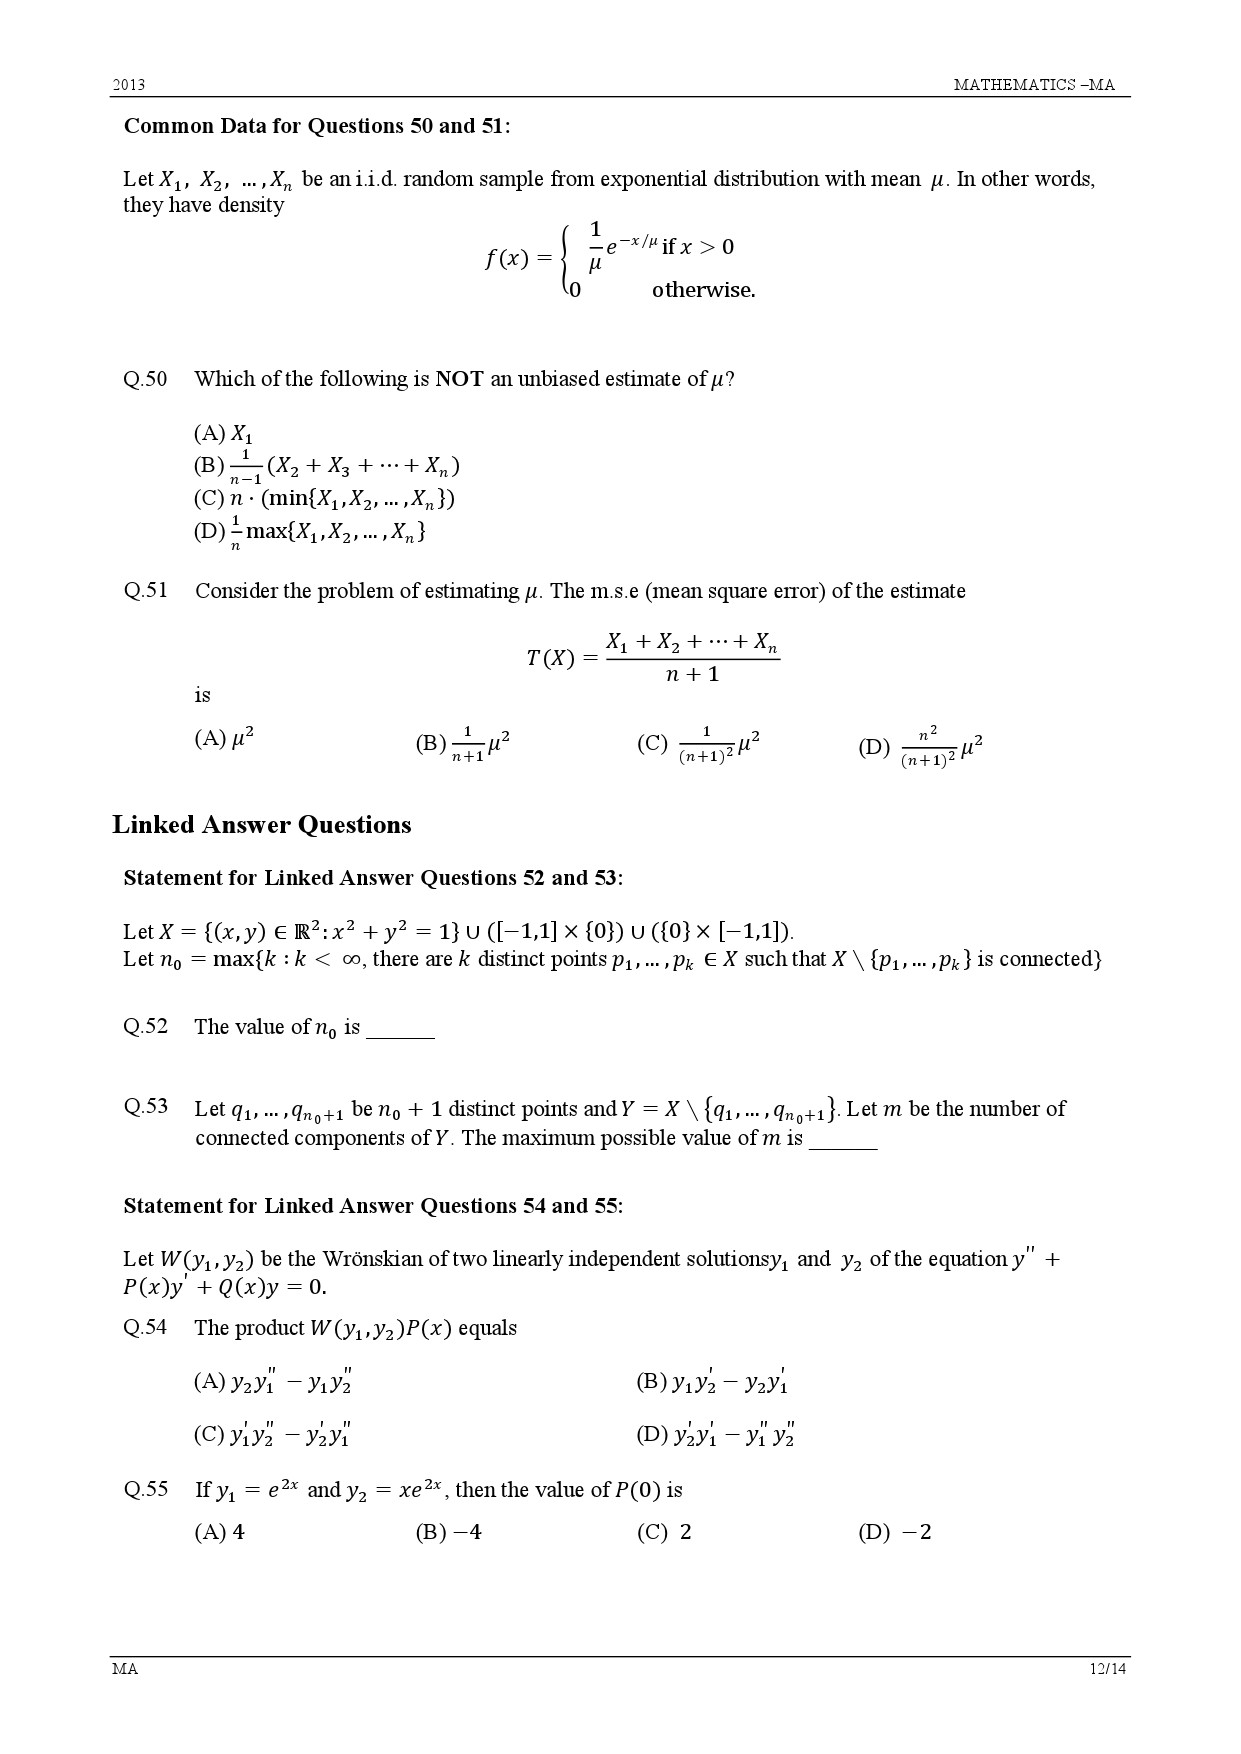 GATE Exam Question Paper 2013 Mathematics 12